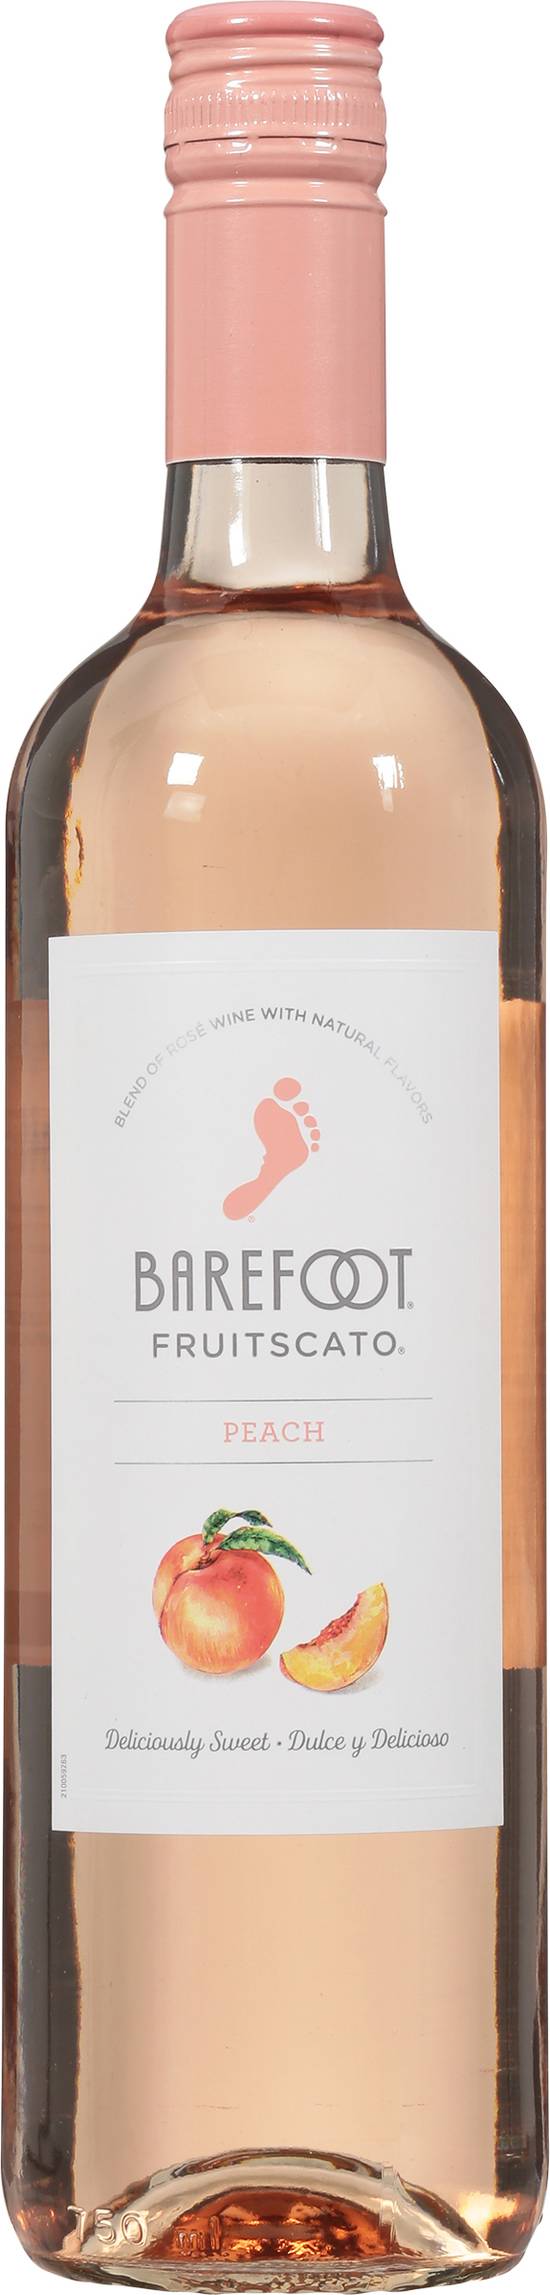 Barefoot Fruitscato Peach Rose Wine (750 ml)